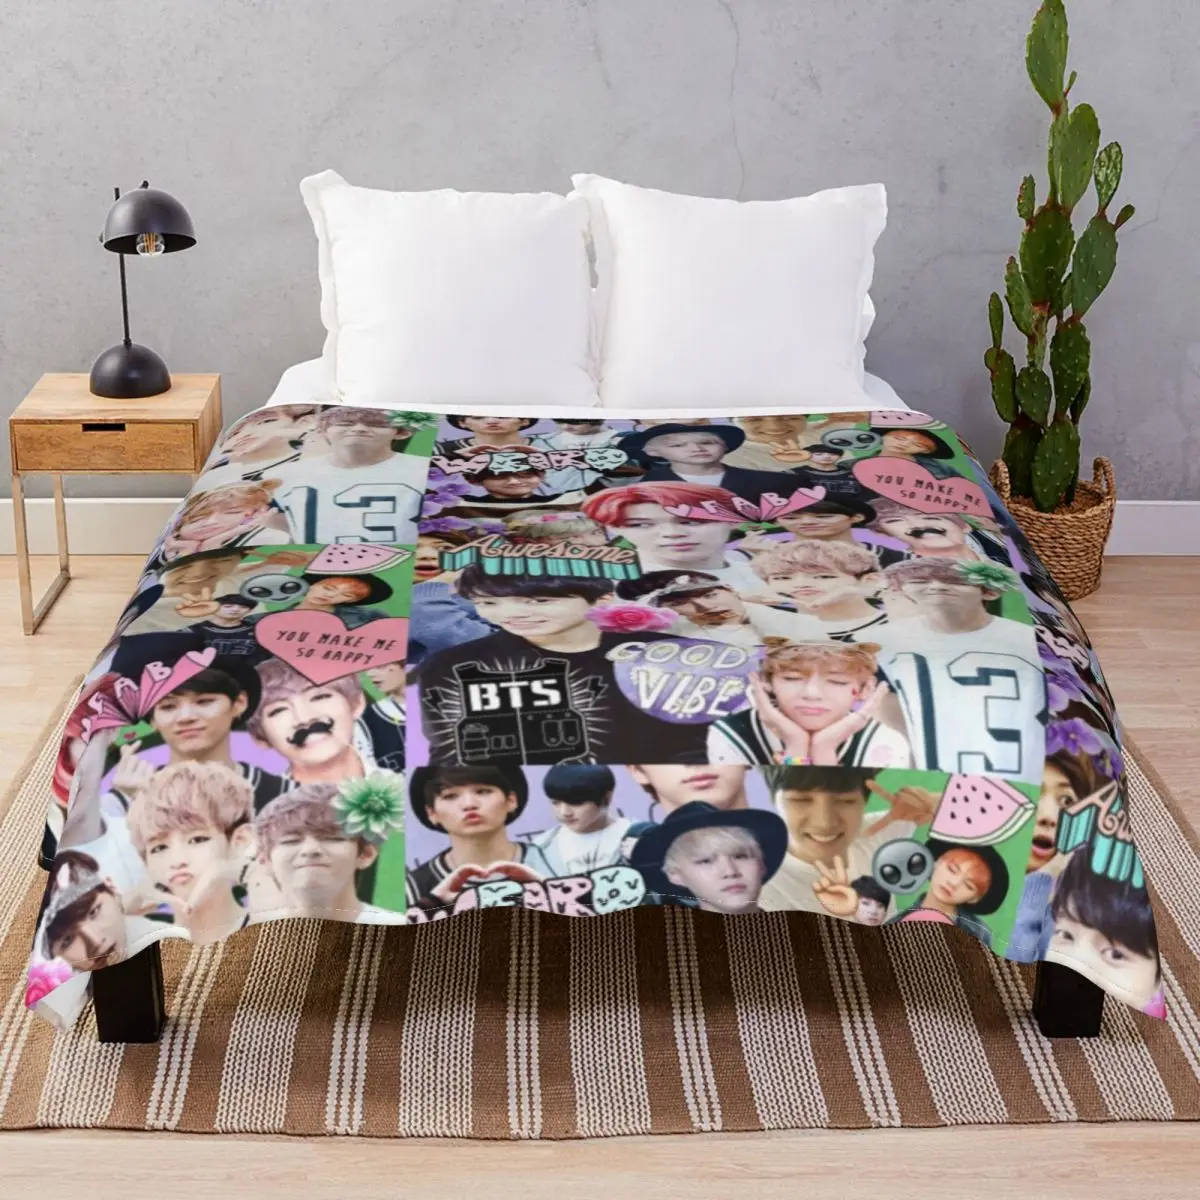 Kpop Collage Blankets Fleece Spring/Autumn Super Soft Unisex Throw Blanket for Bedding Home Couch Camp Cinema